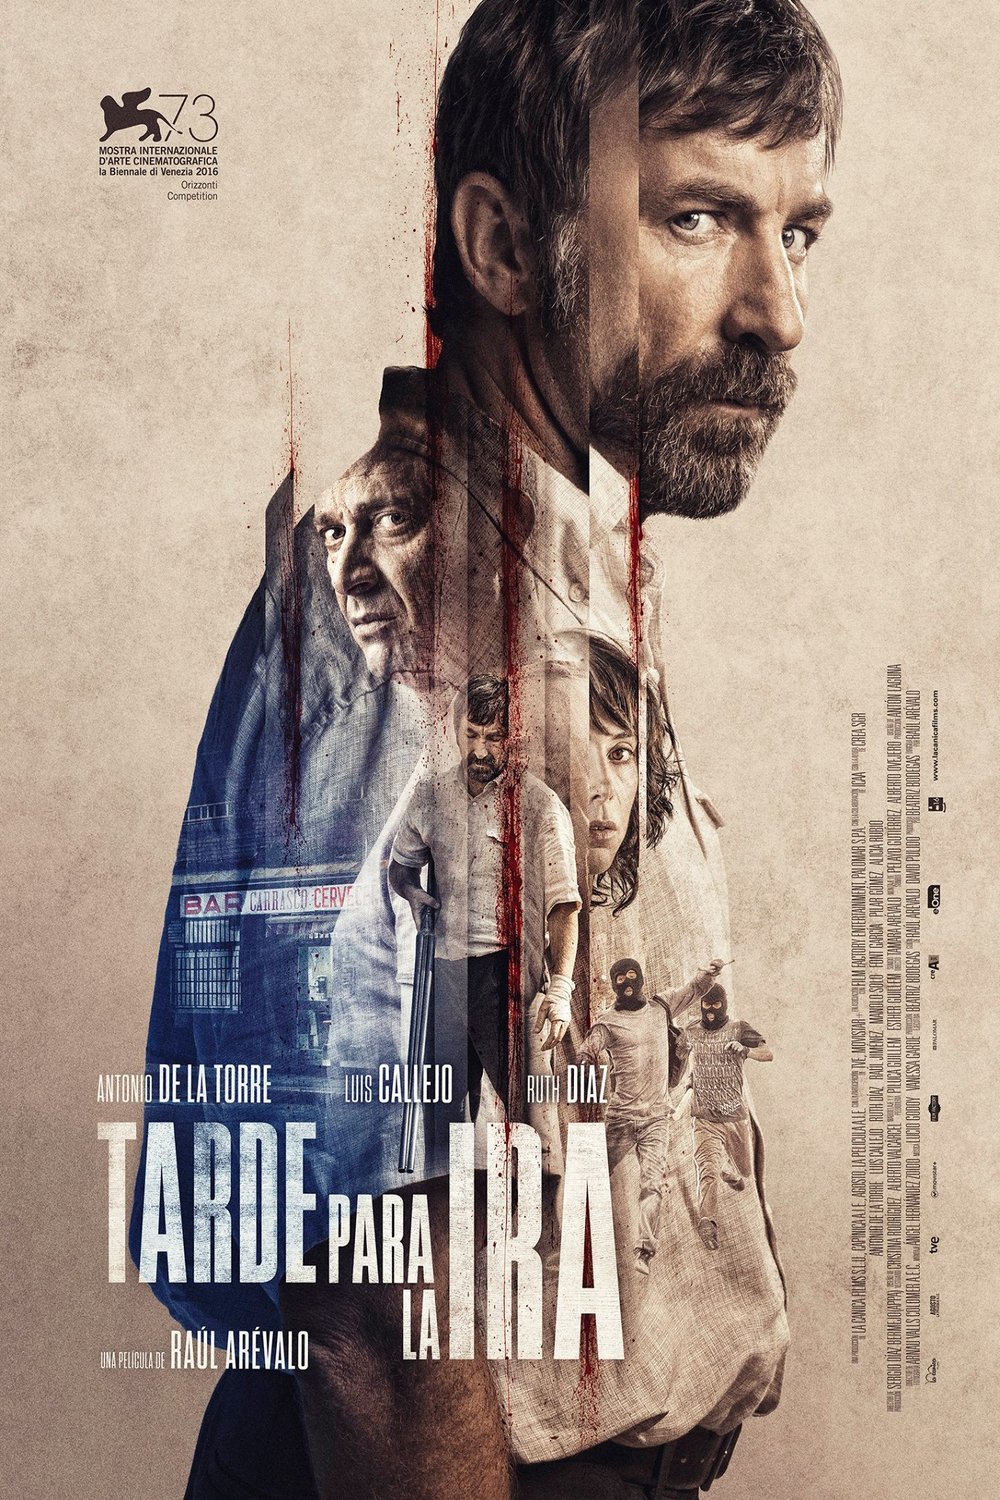 L'affiche originale du film Tarde para la ira en espagnol